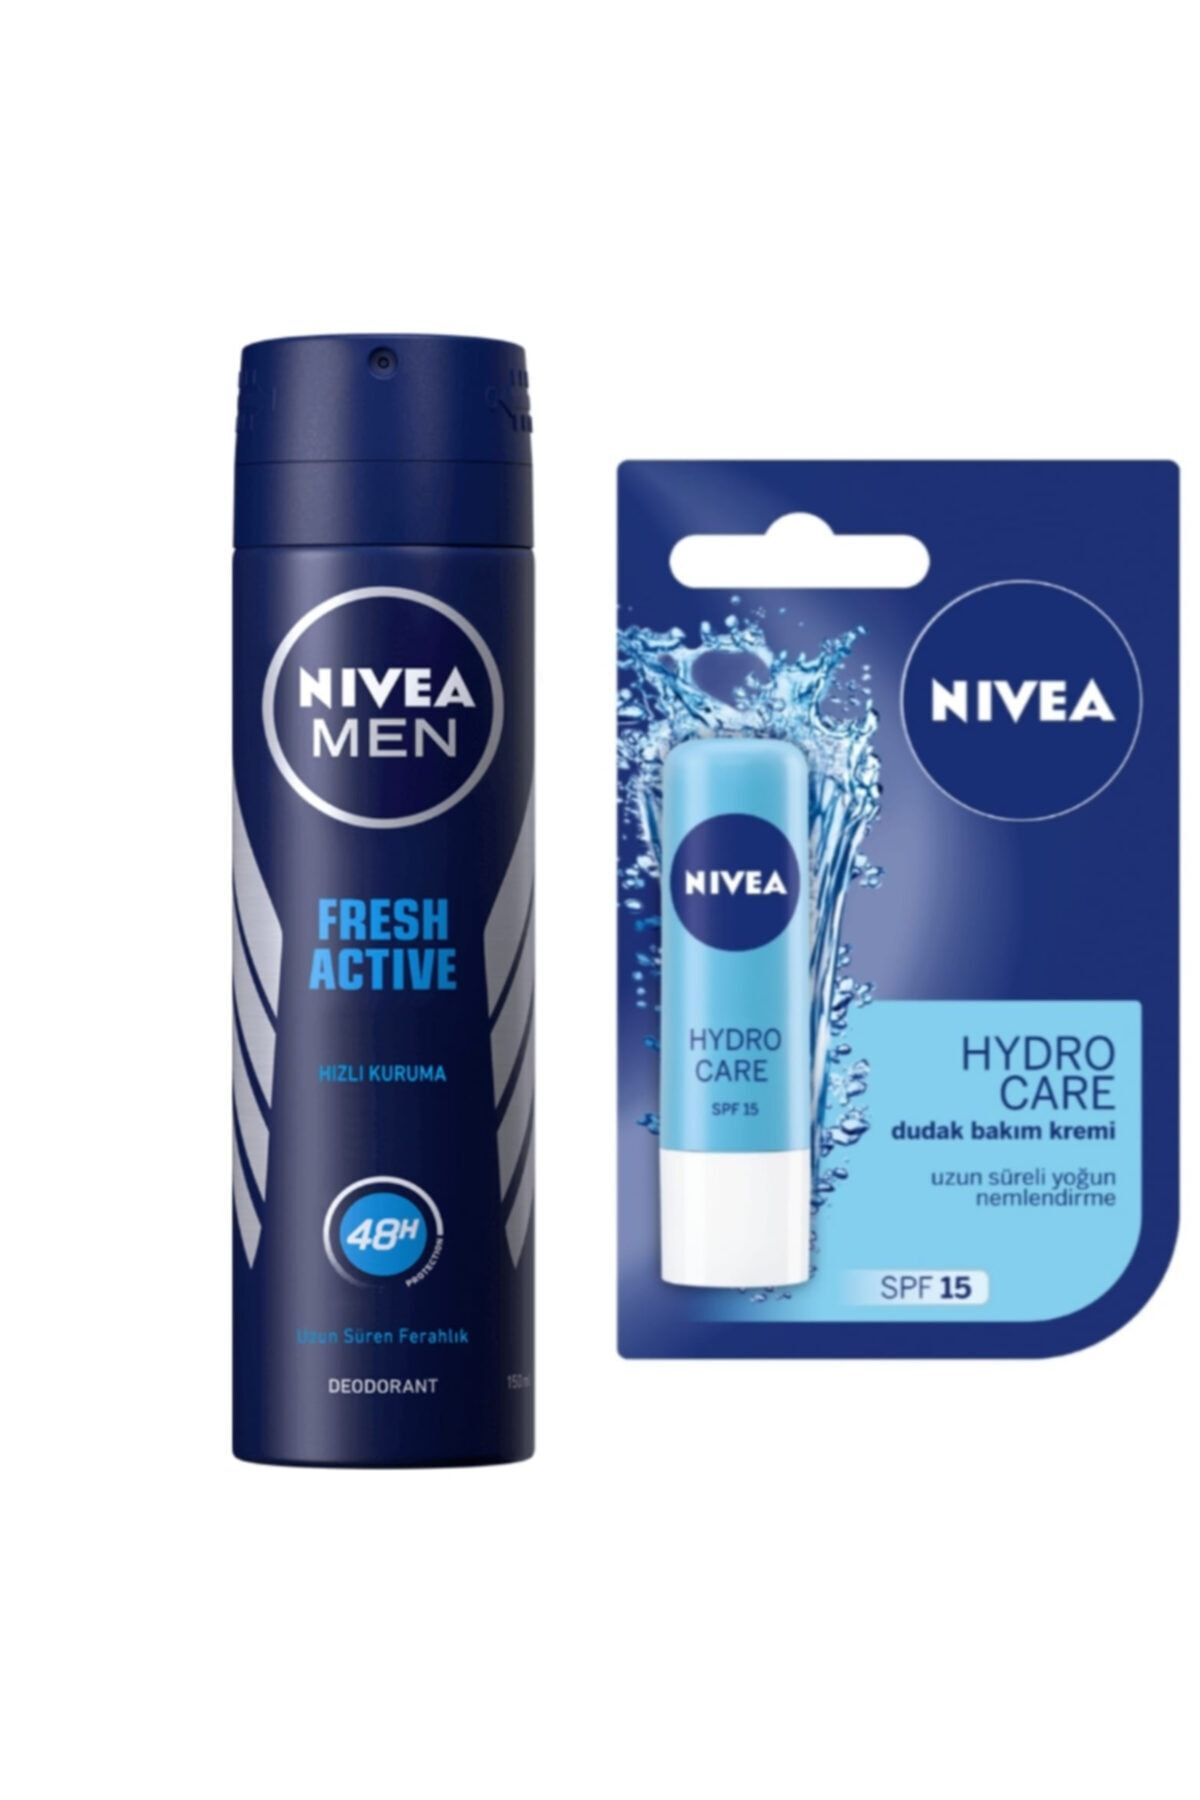 NIVEA Men Fresh Active Deodorant + Hydro Care Dudak Bakım Kremi 2'li